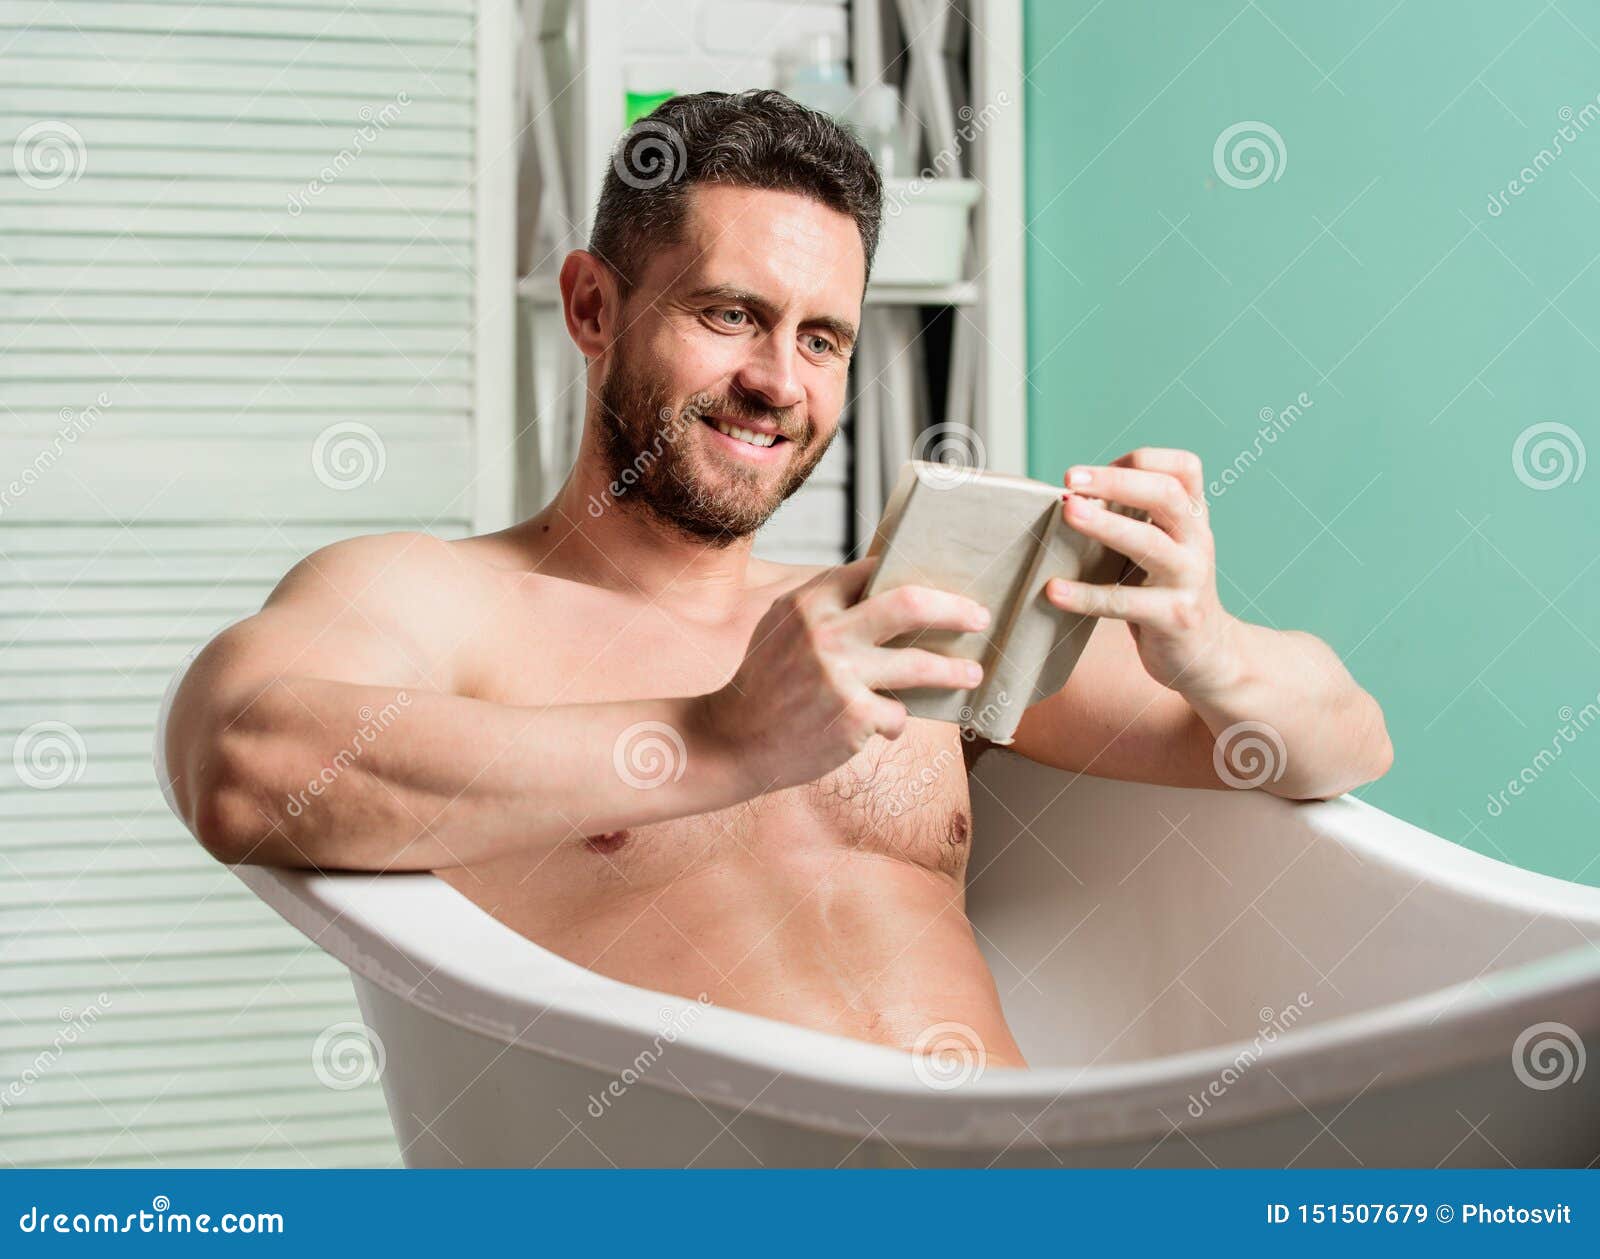 Man in Bathroom Reading. Macho Naked in Bathtub pic